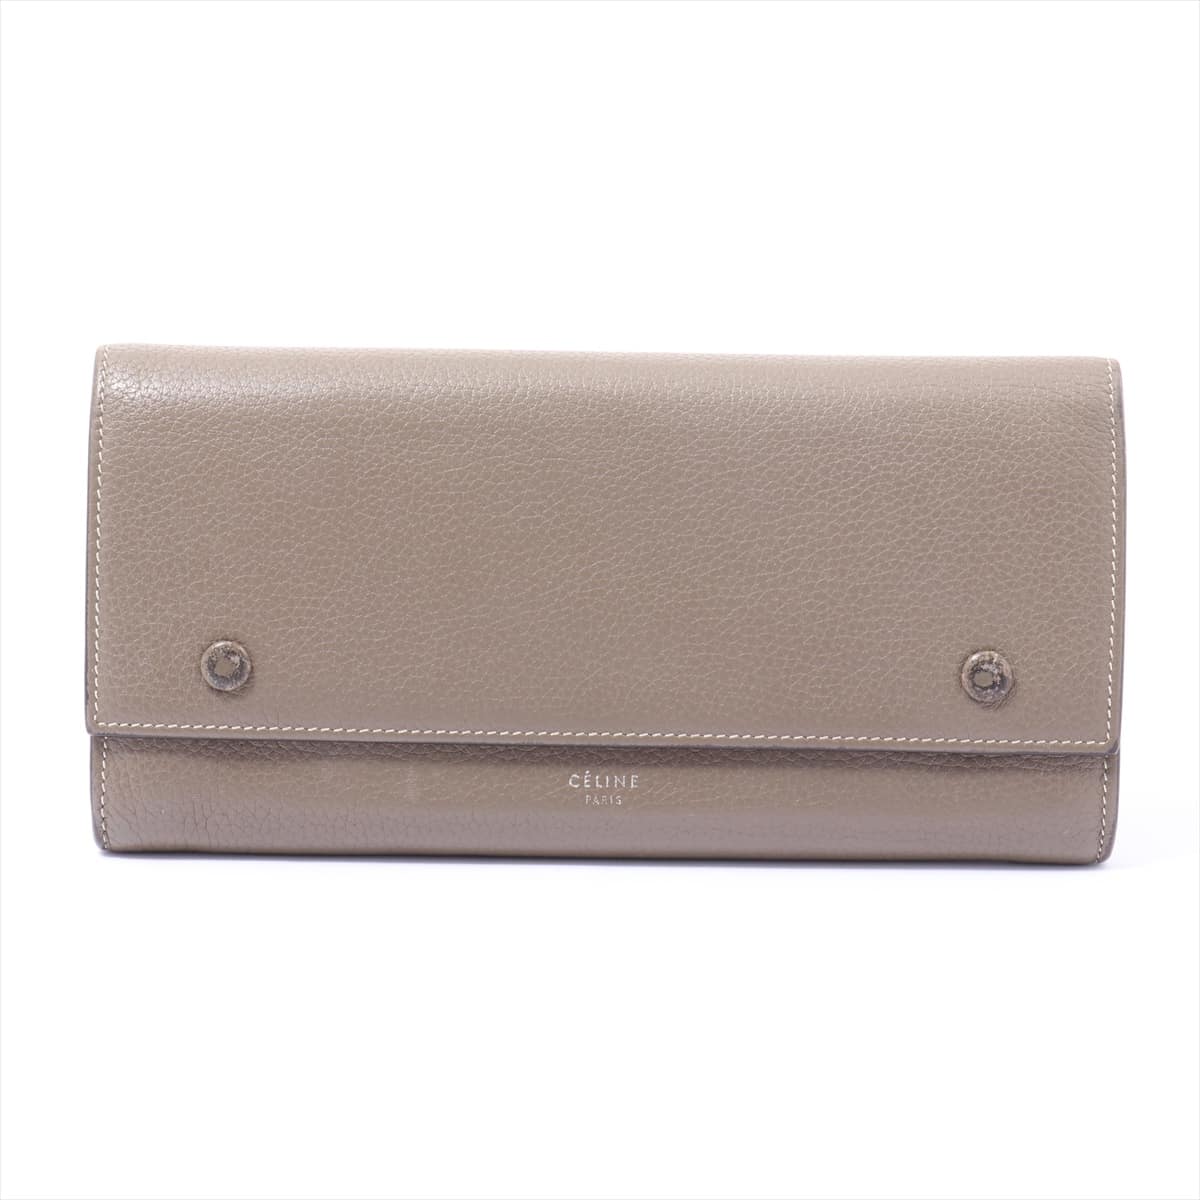 CELINE Large Flap Multi Function Leather Wallet Grey